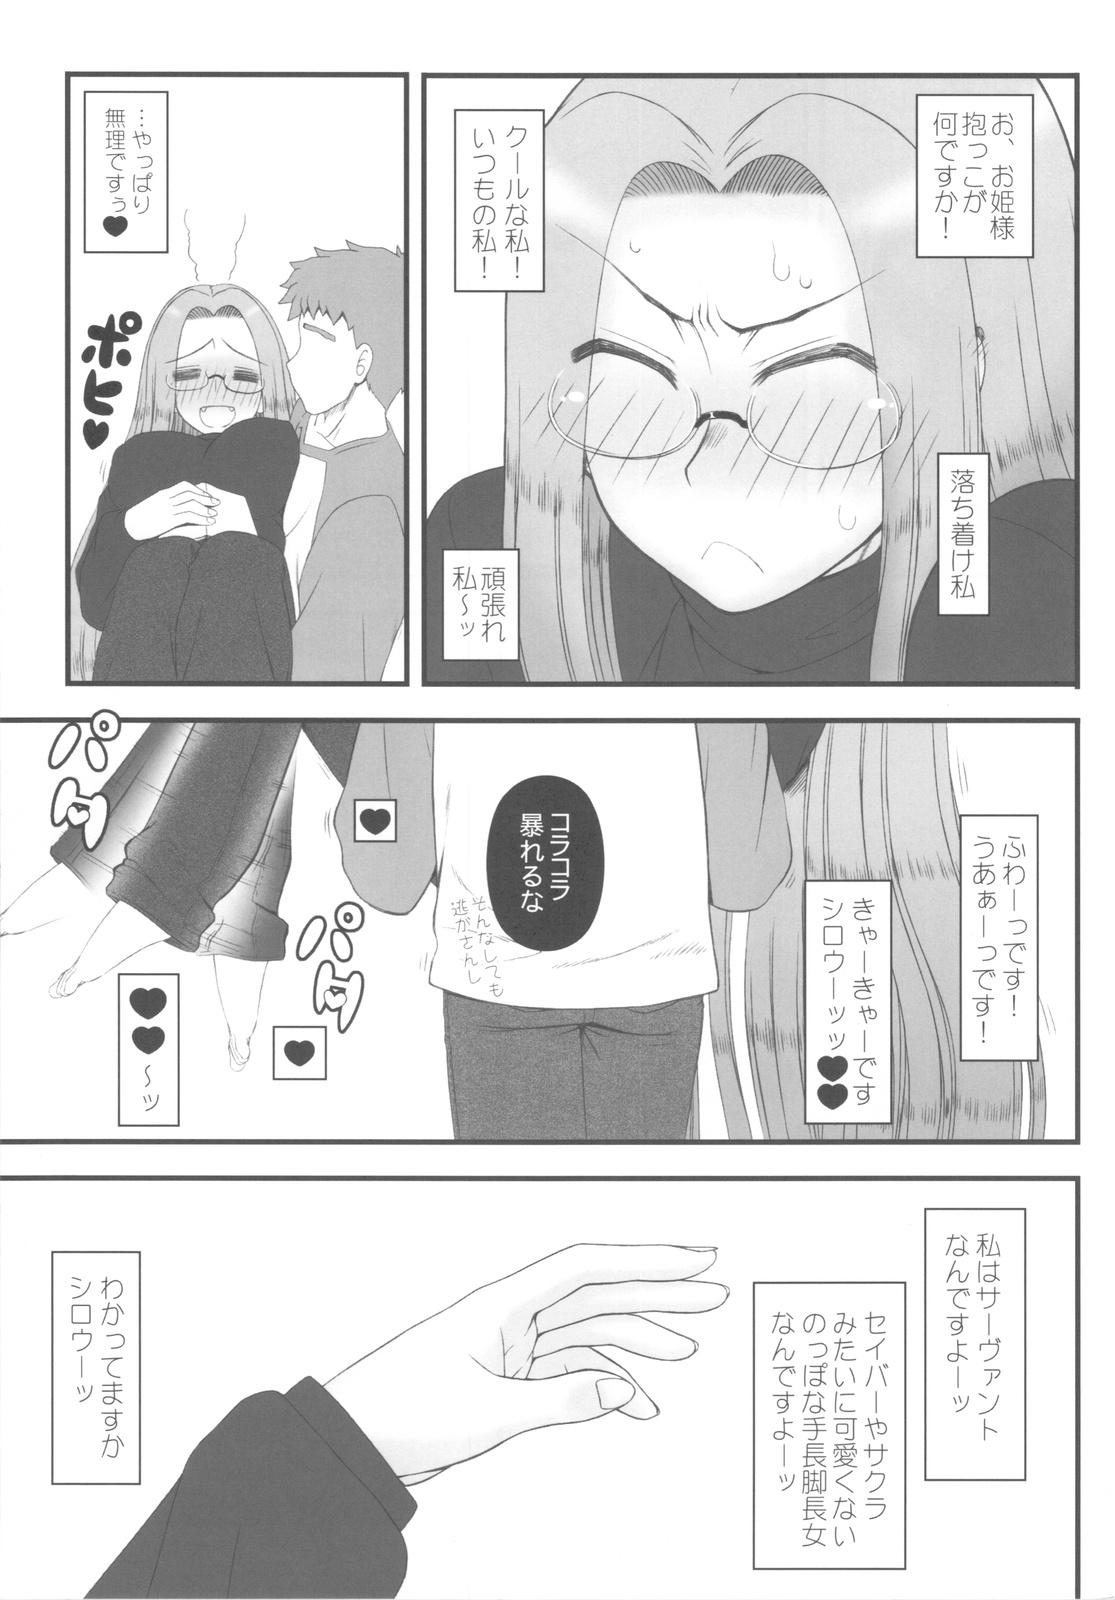 Finger Ohimesama no Yoru - Fate stay night Friends - Page 4